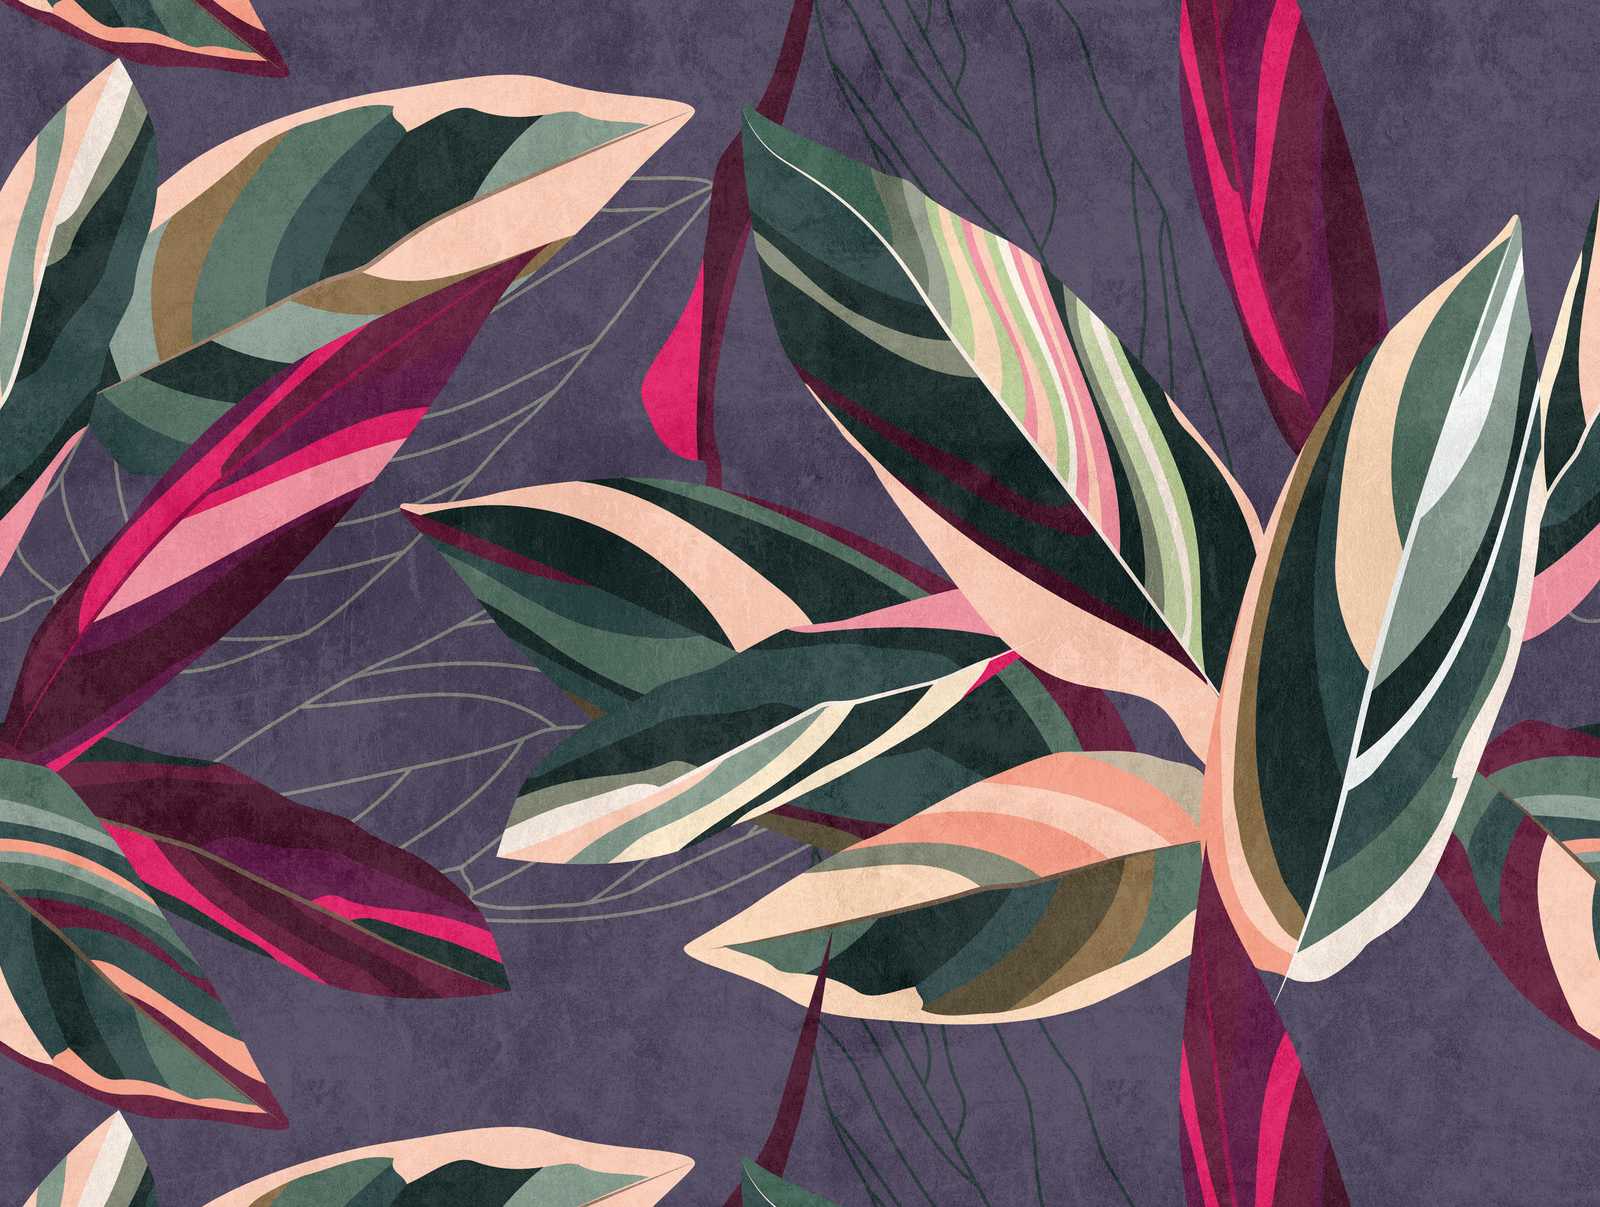             Wallpaper novelty - motif wallpaper leaves design in colour block style
        